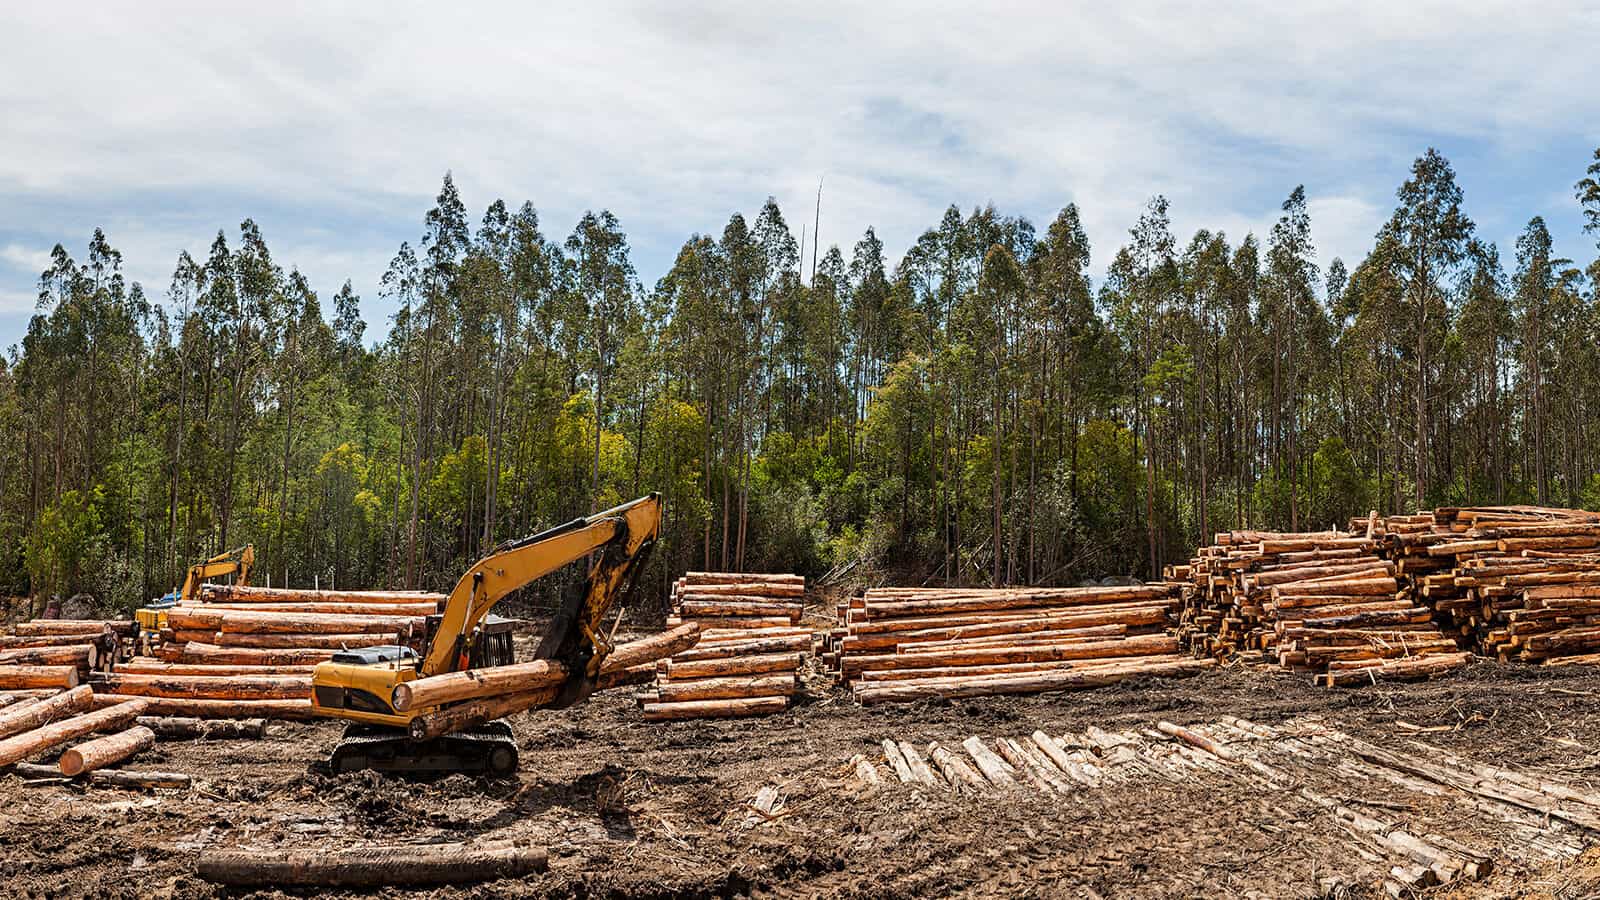 Logging Industry May Turn Amazon Rainforests into Savannahs